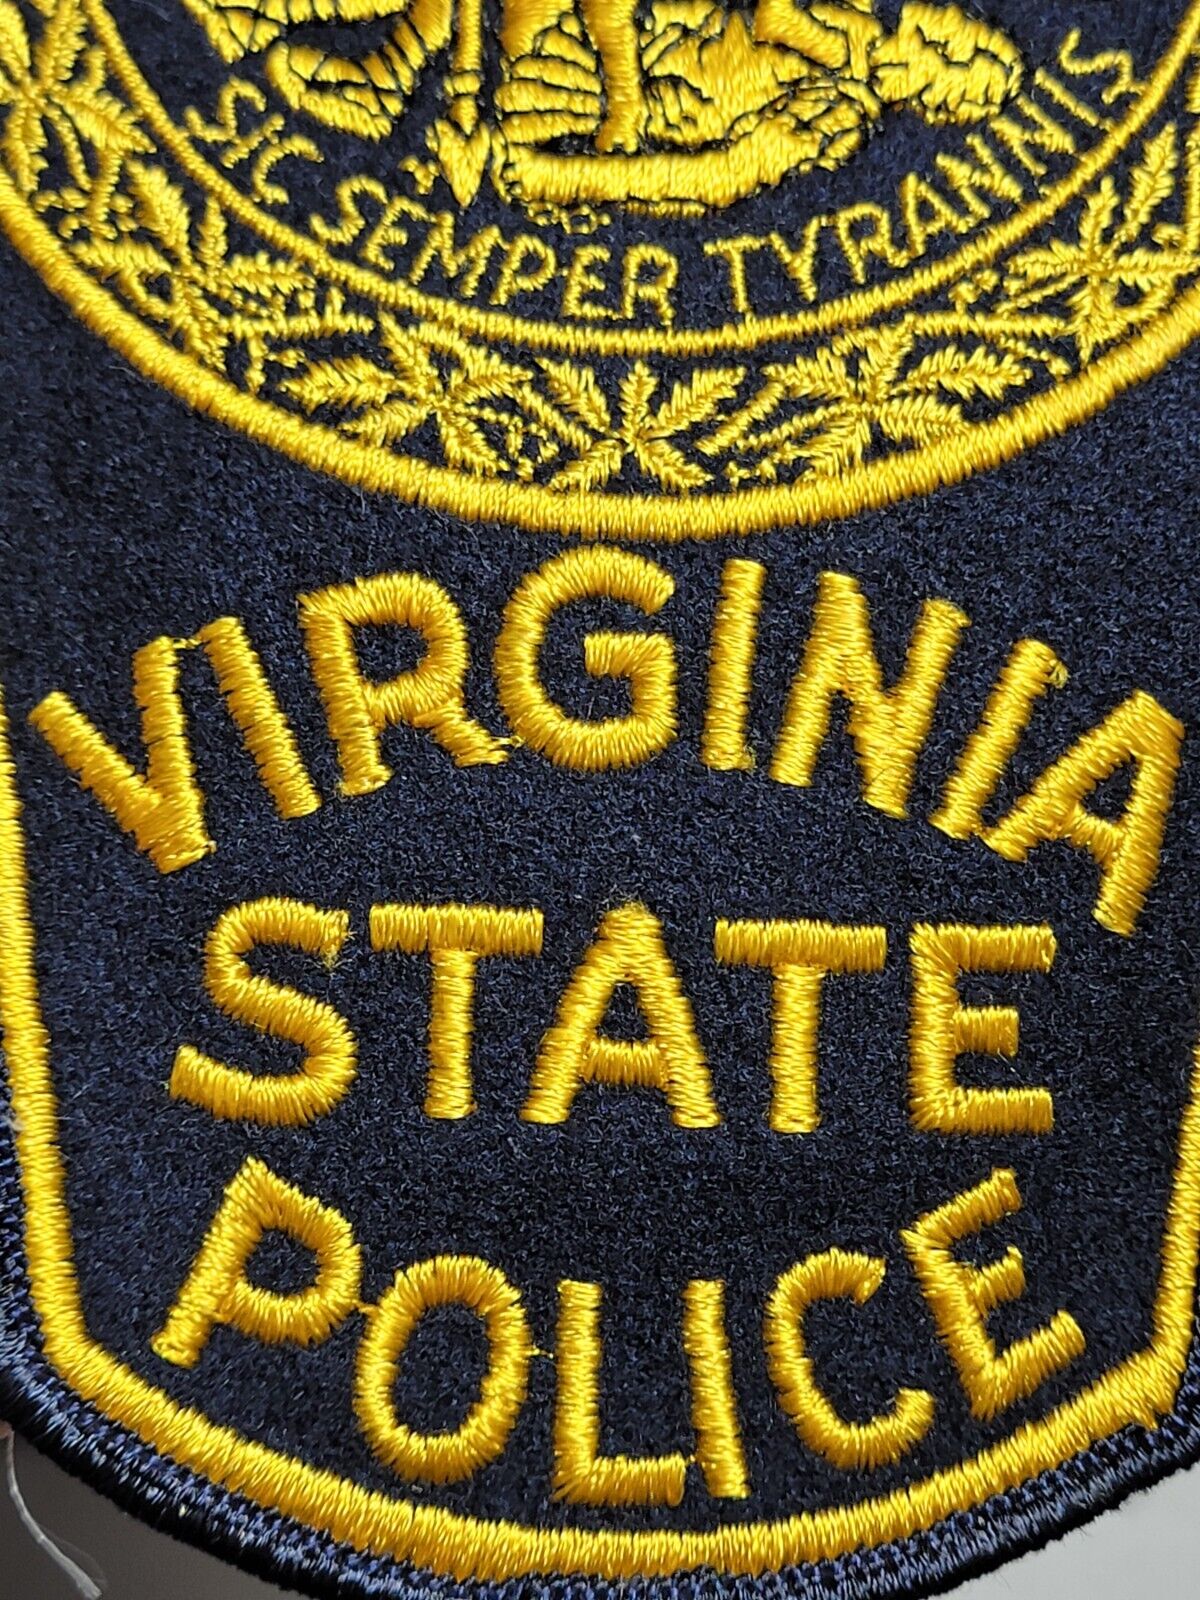 LE9b7 Police patch felt Virginia State Police vintage 